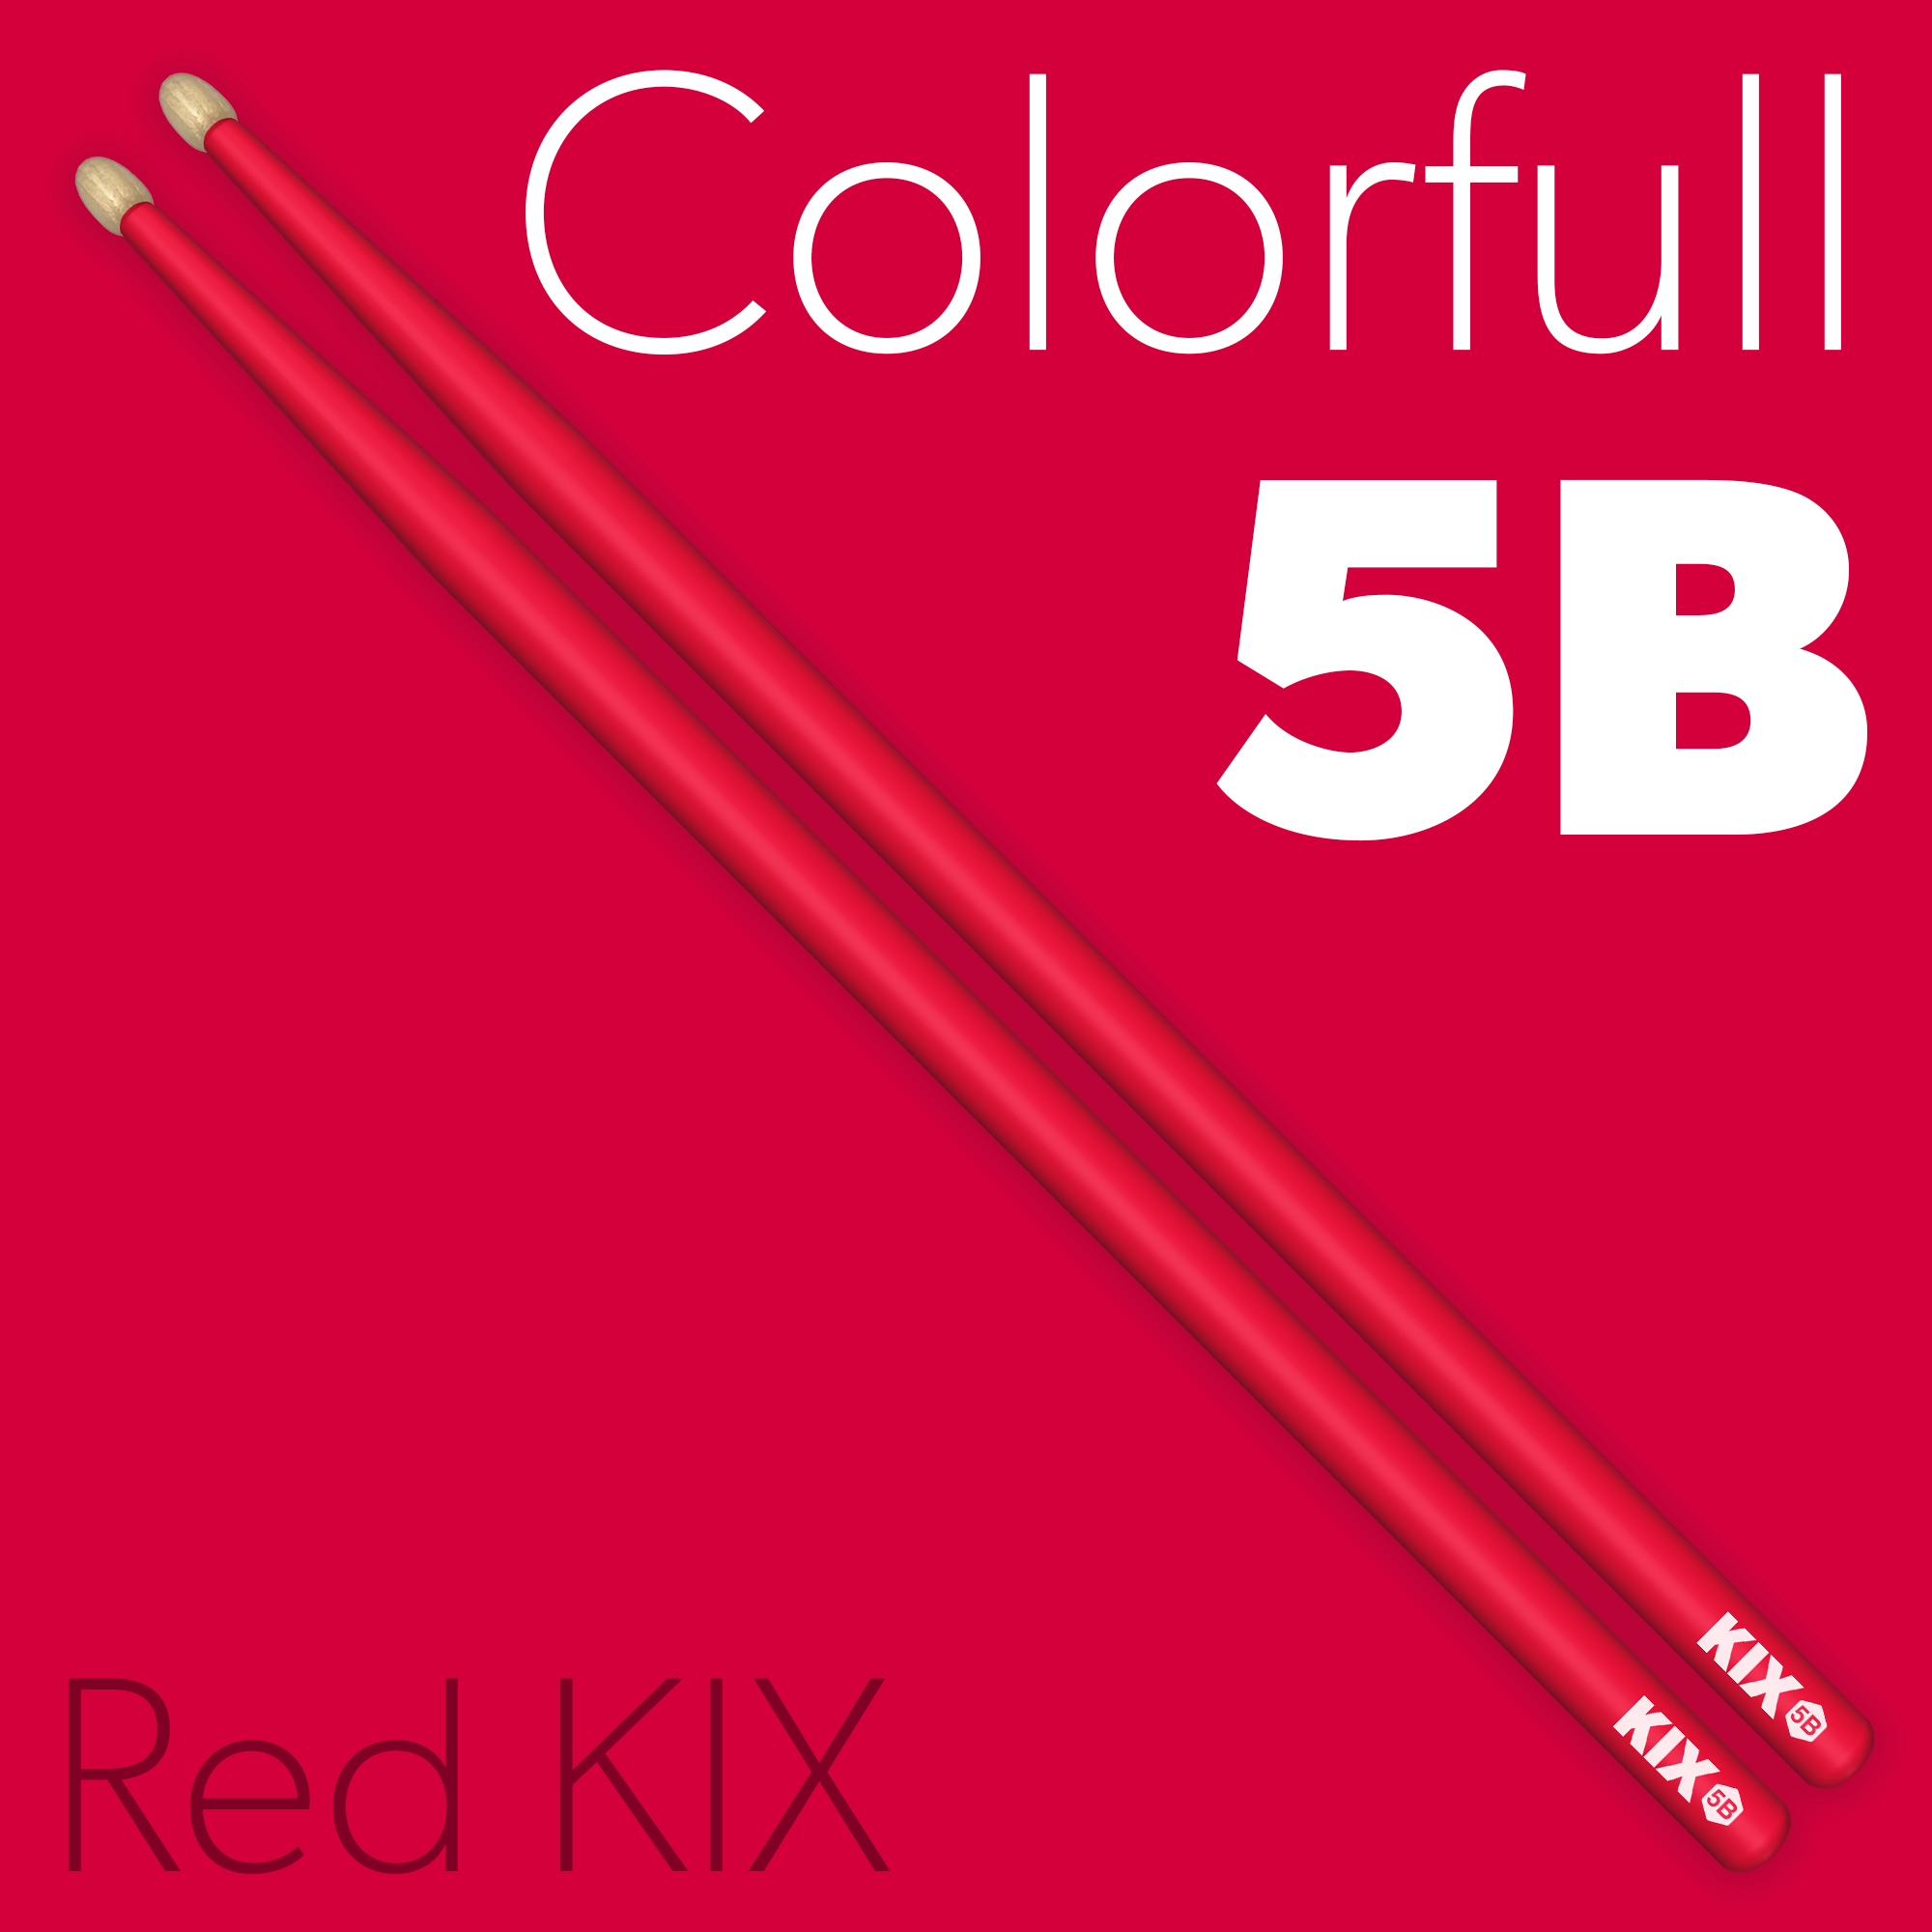 Baguettes Colorfull 5B - Red KIX